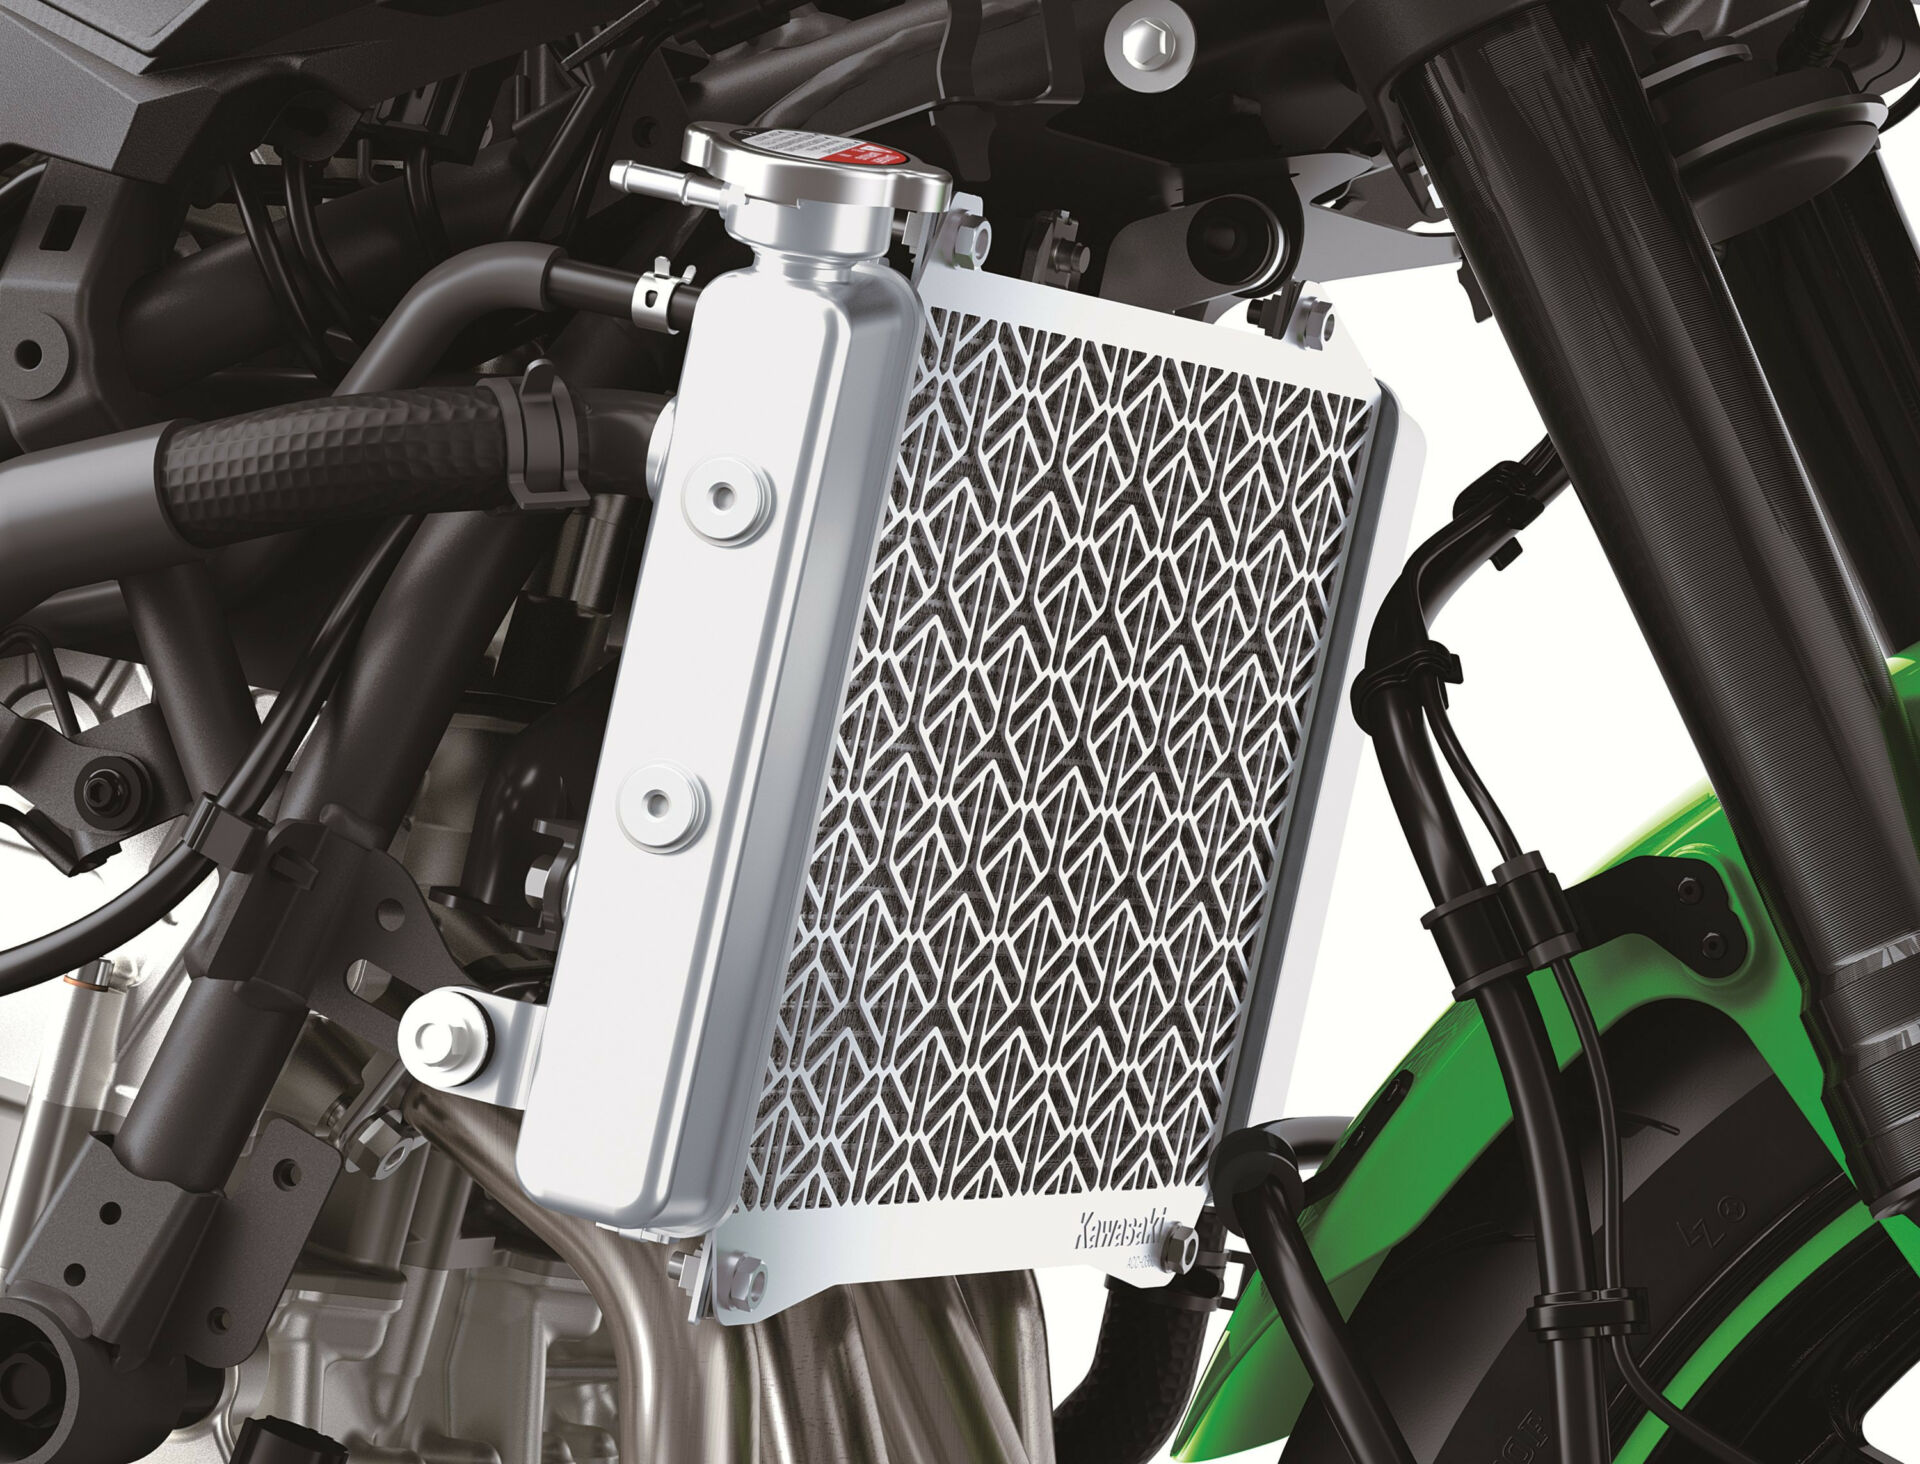 A large radiator keeps the Ninja ZX-4RR's high-revving engine cool. Photo courtesy Kawasaki.